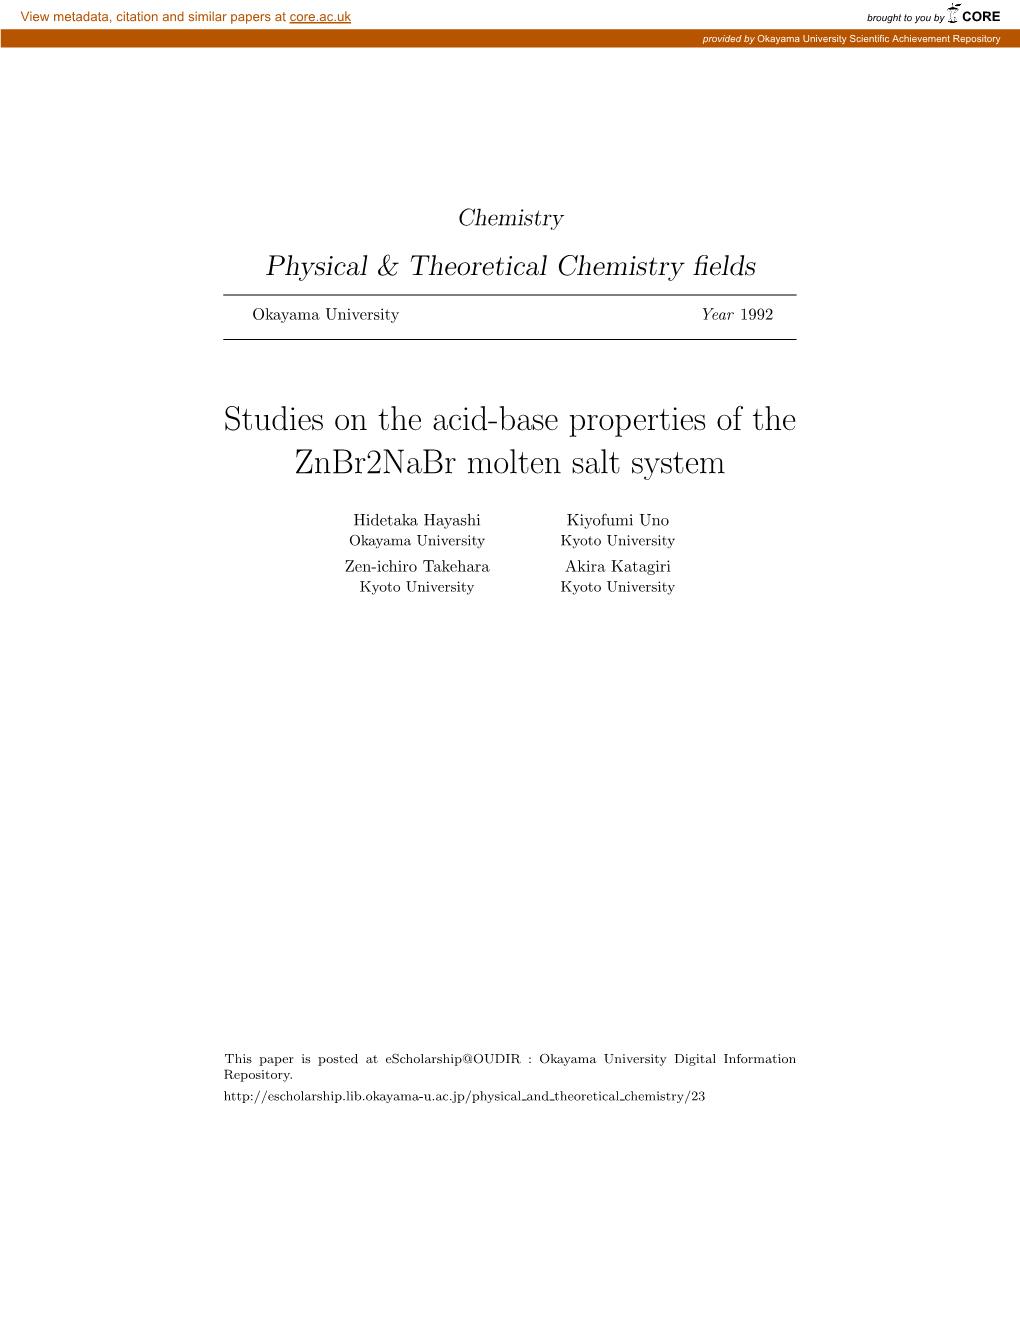 Studies on the Acid-Base Properties of the Znbr2nabr Molten Salt System